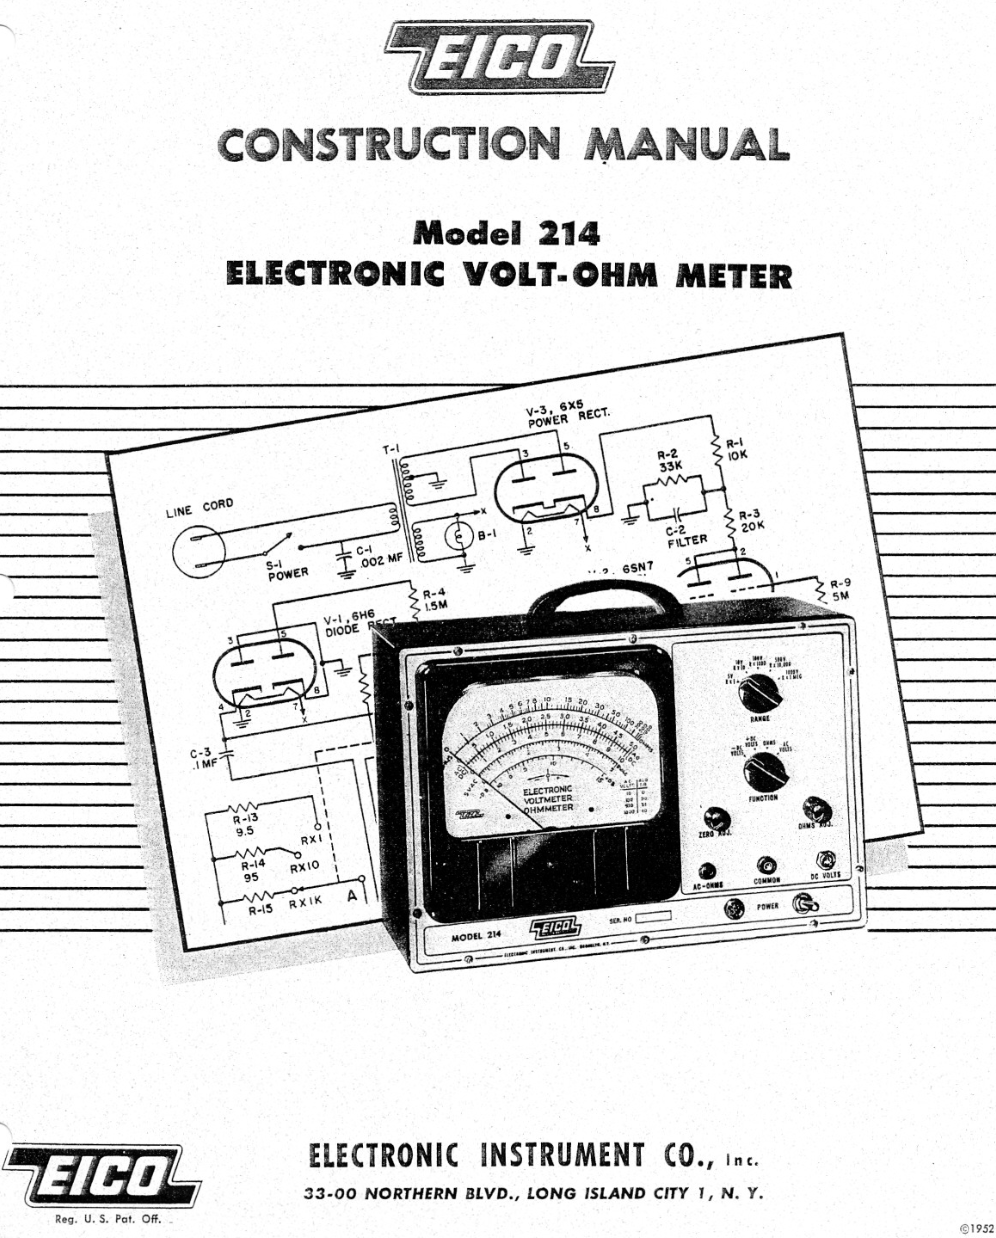 EICO 214 - Construction Manual